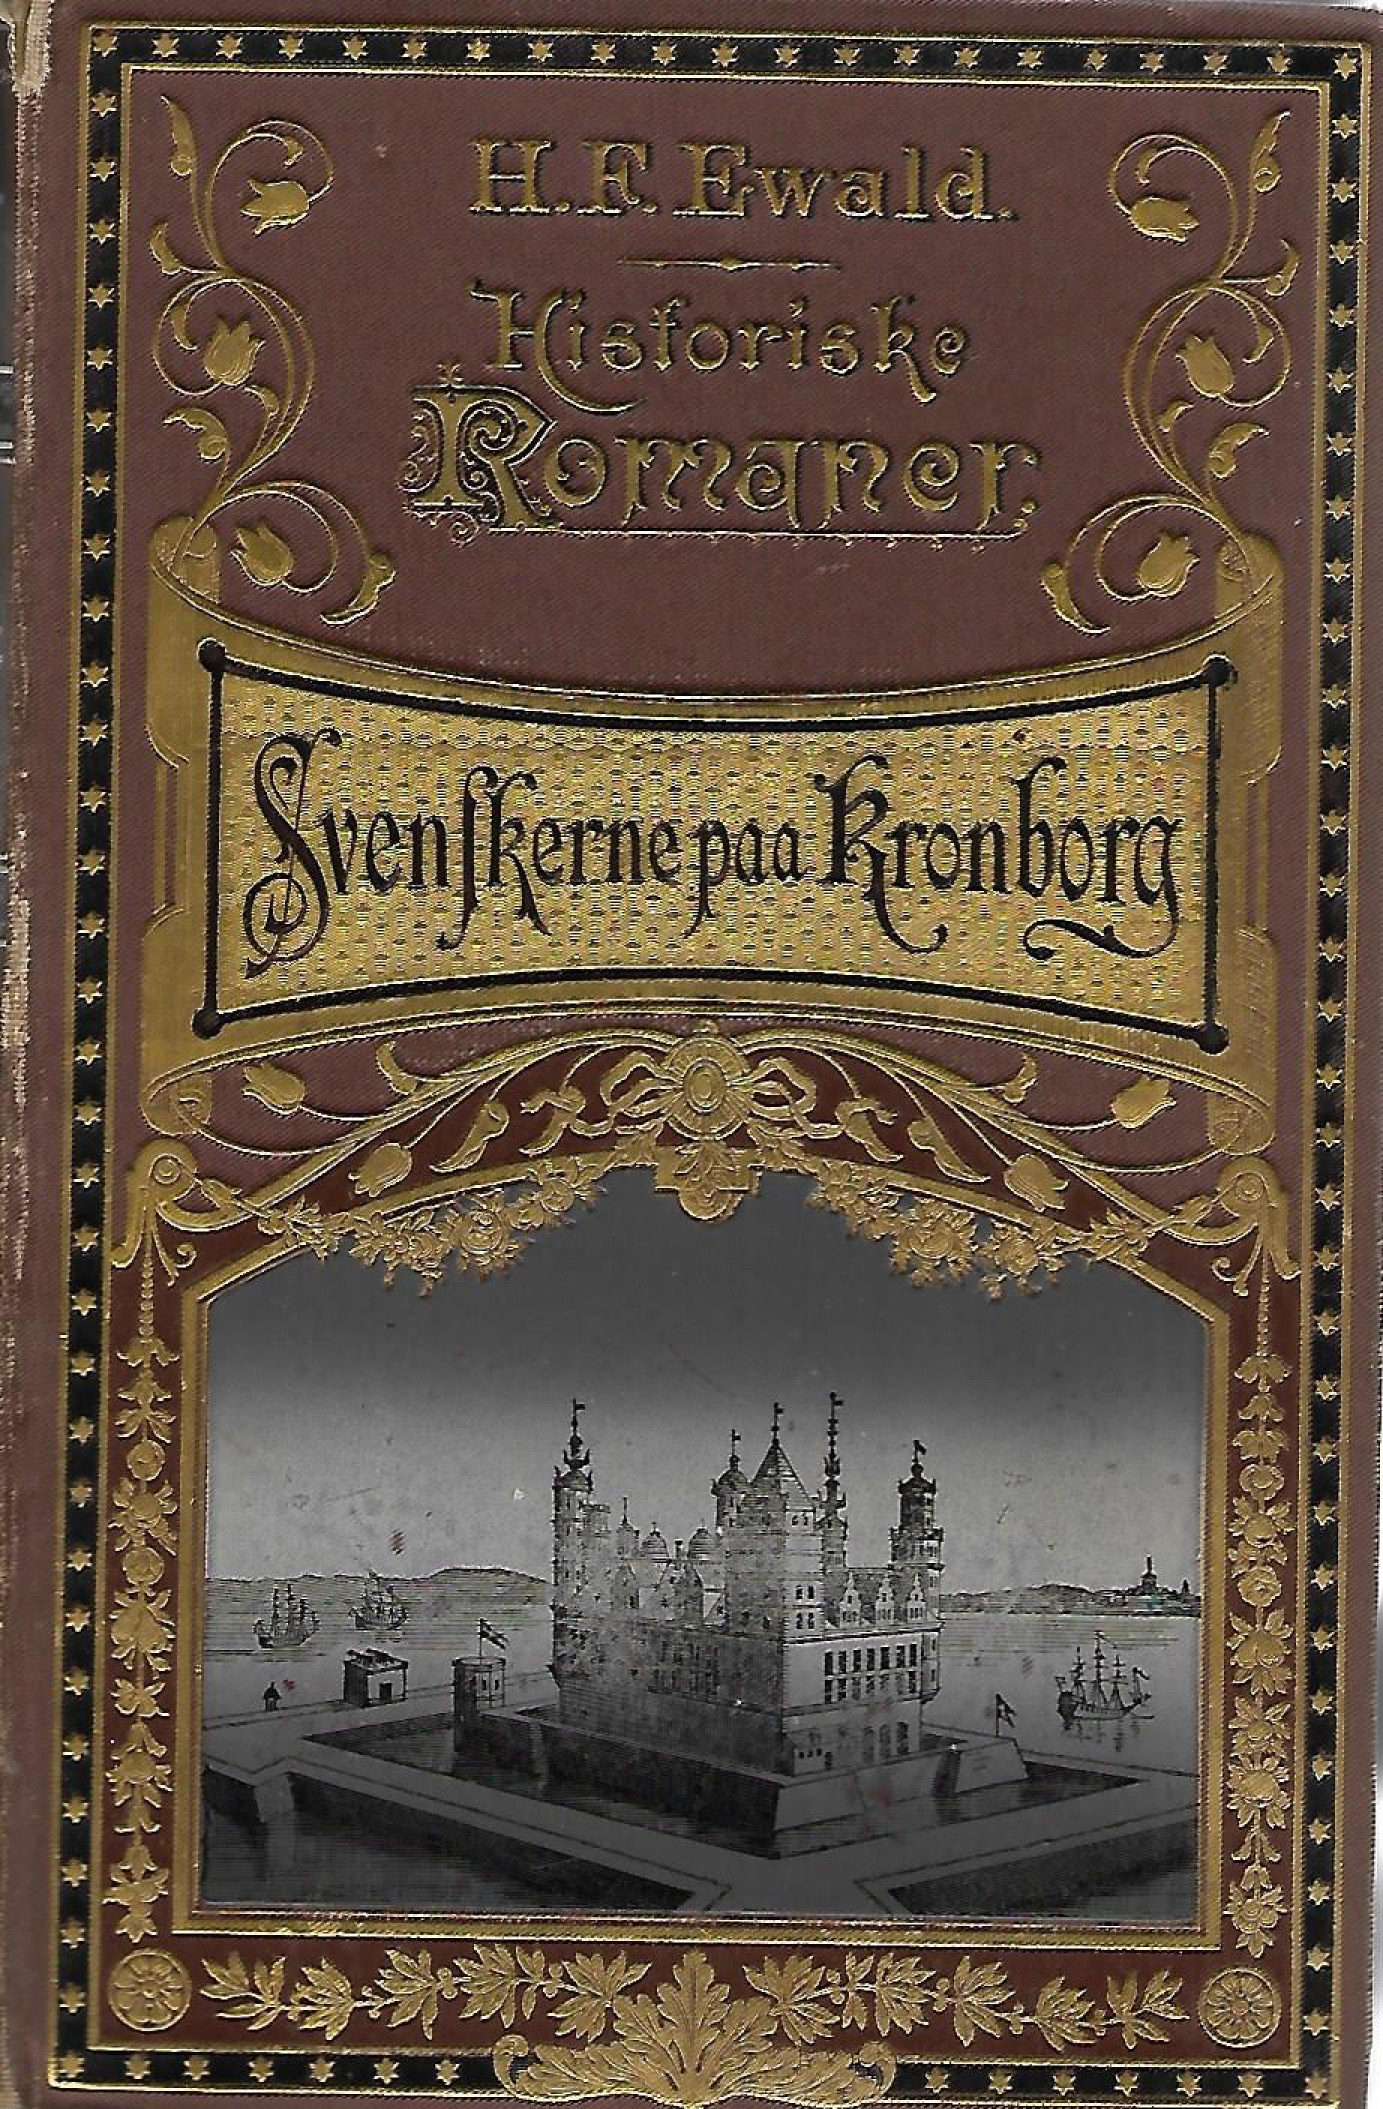 Svenskerne paa Kronborg - Historisk roman - H F Ewald 1910-1